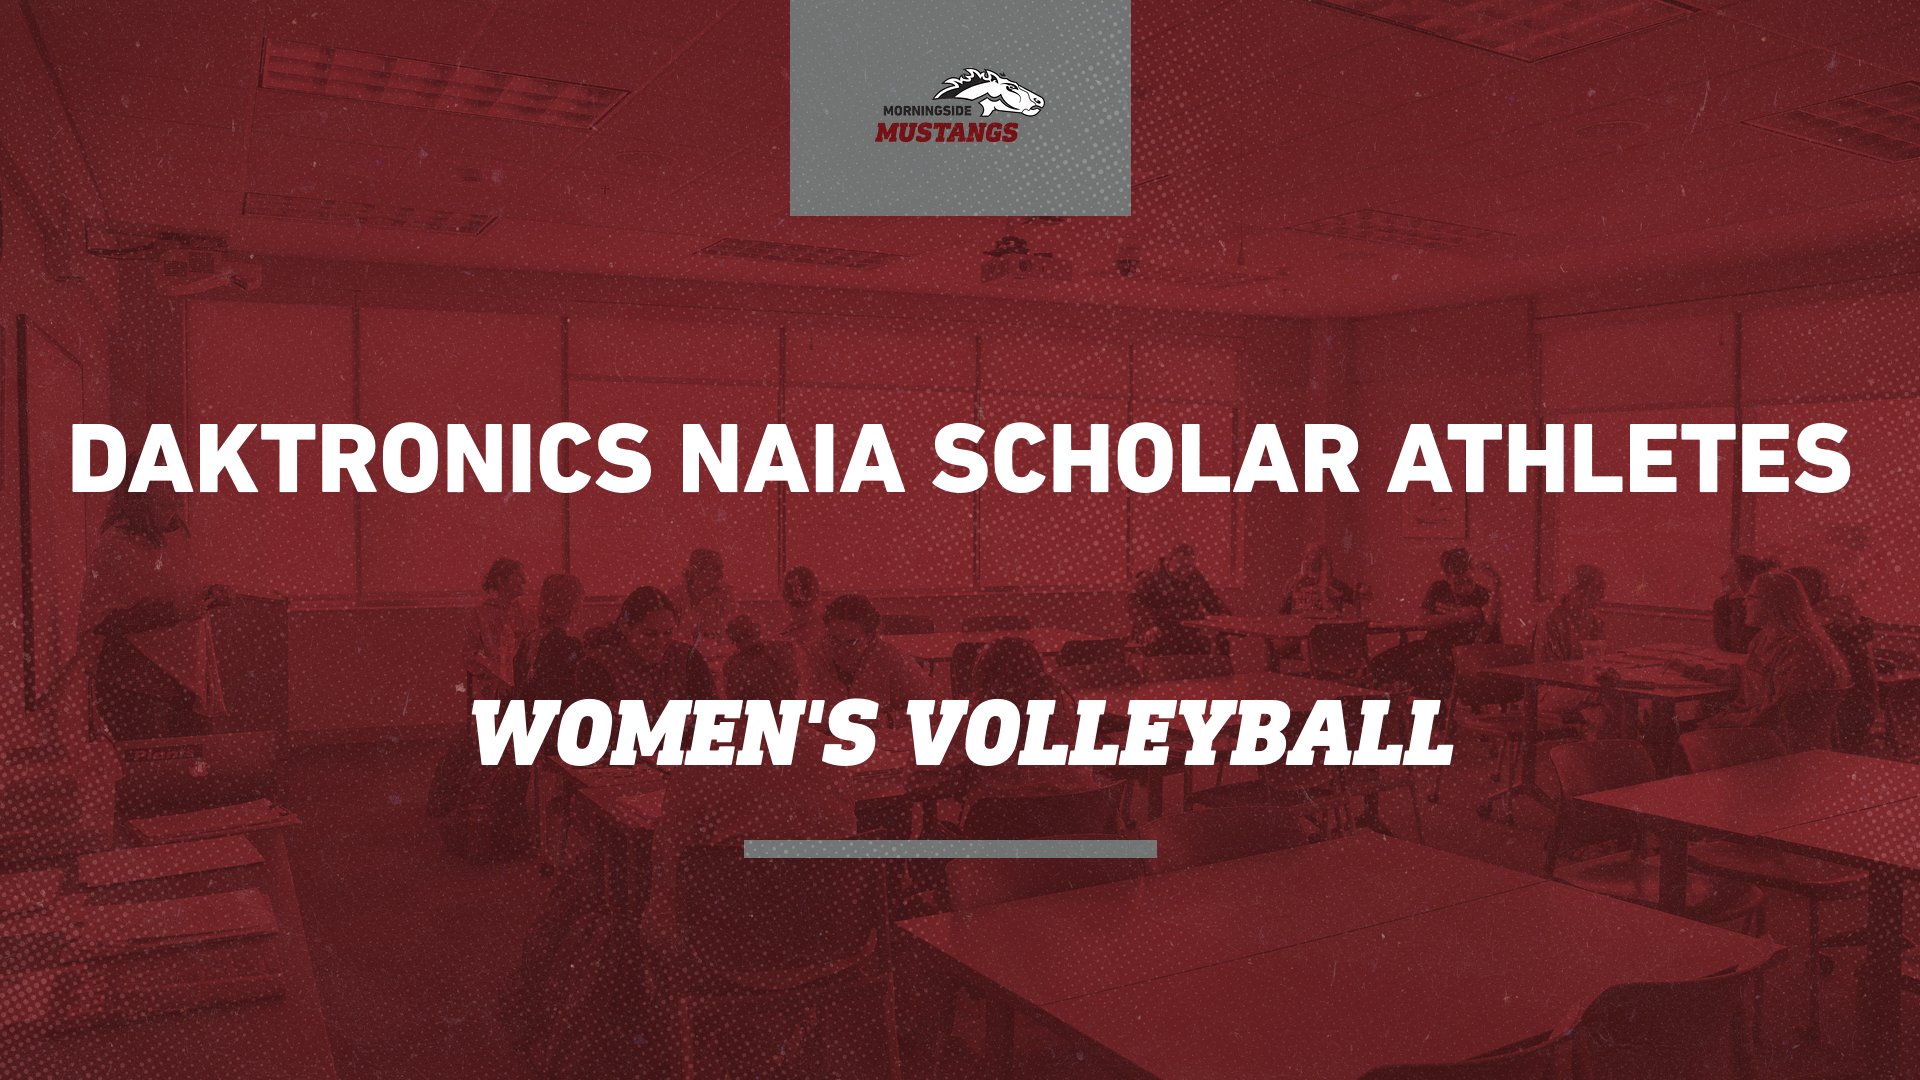 Women's Volleyball Scholar Athletes